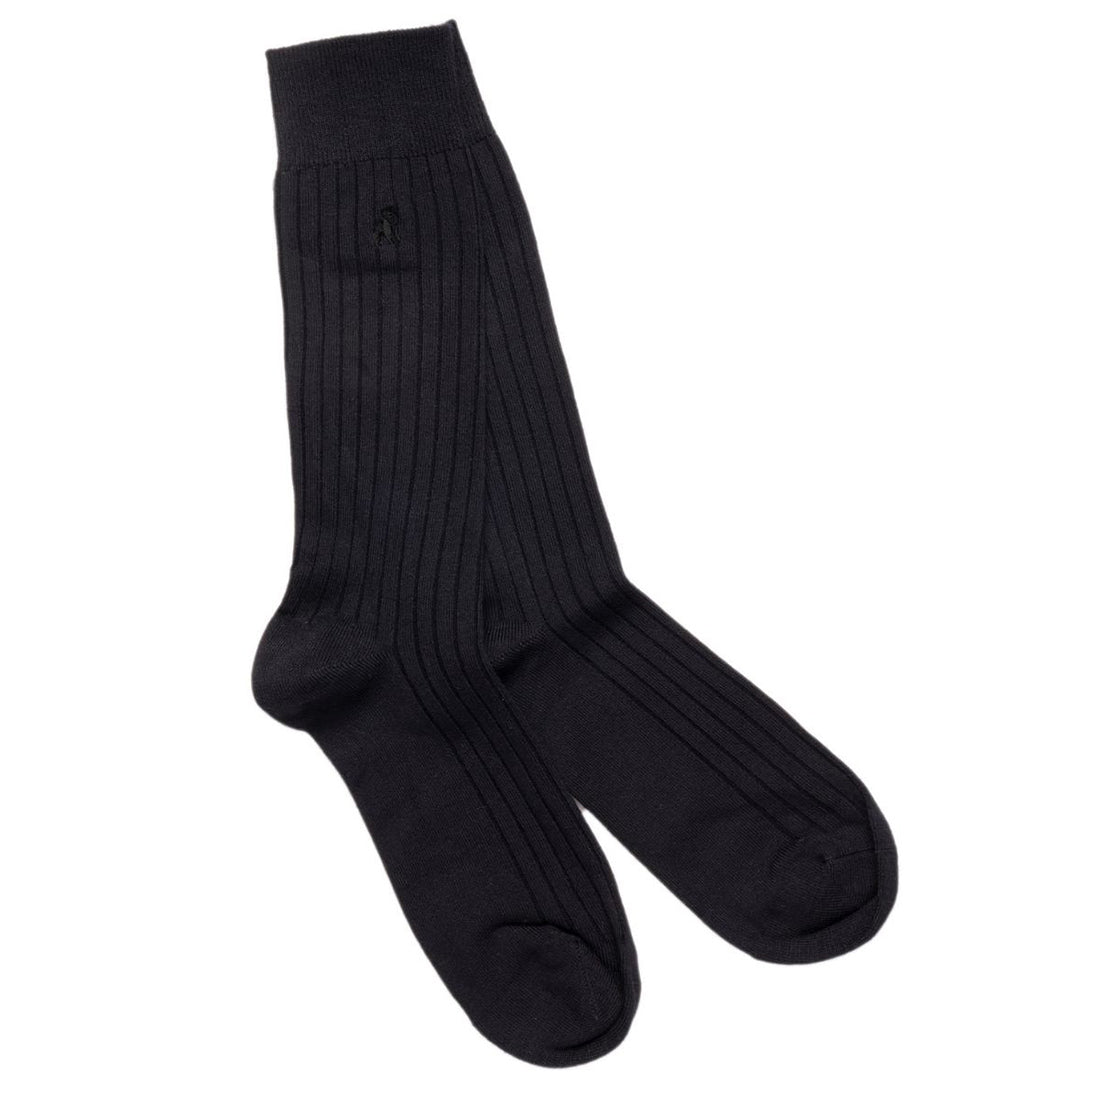 Navy Bamboo Socks (Comfort Cuff)